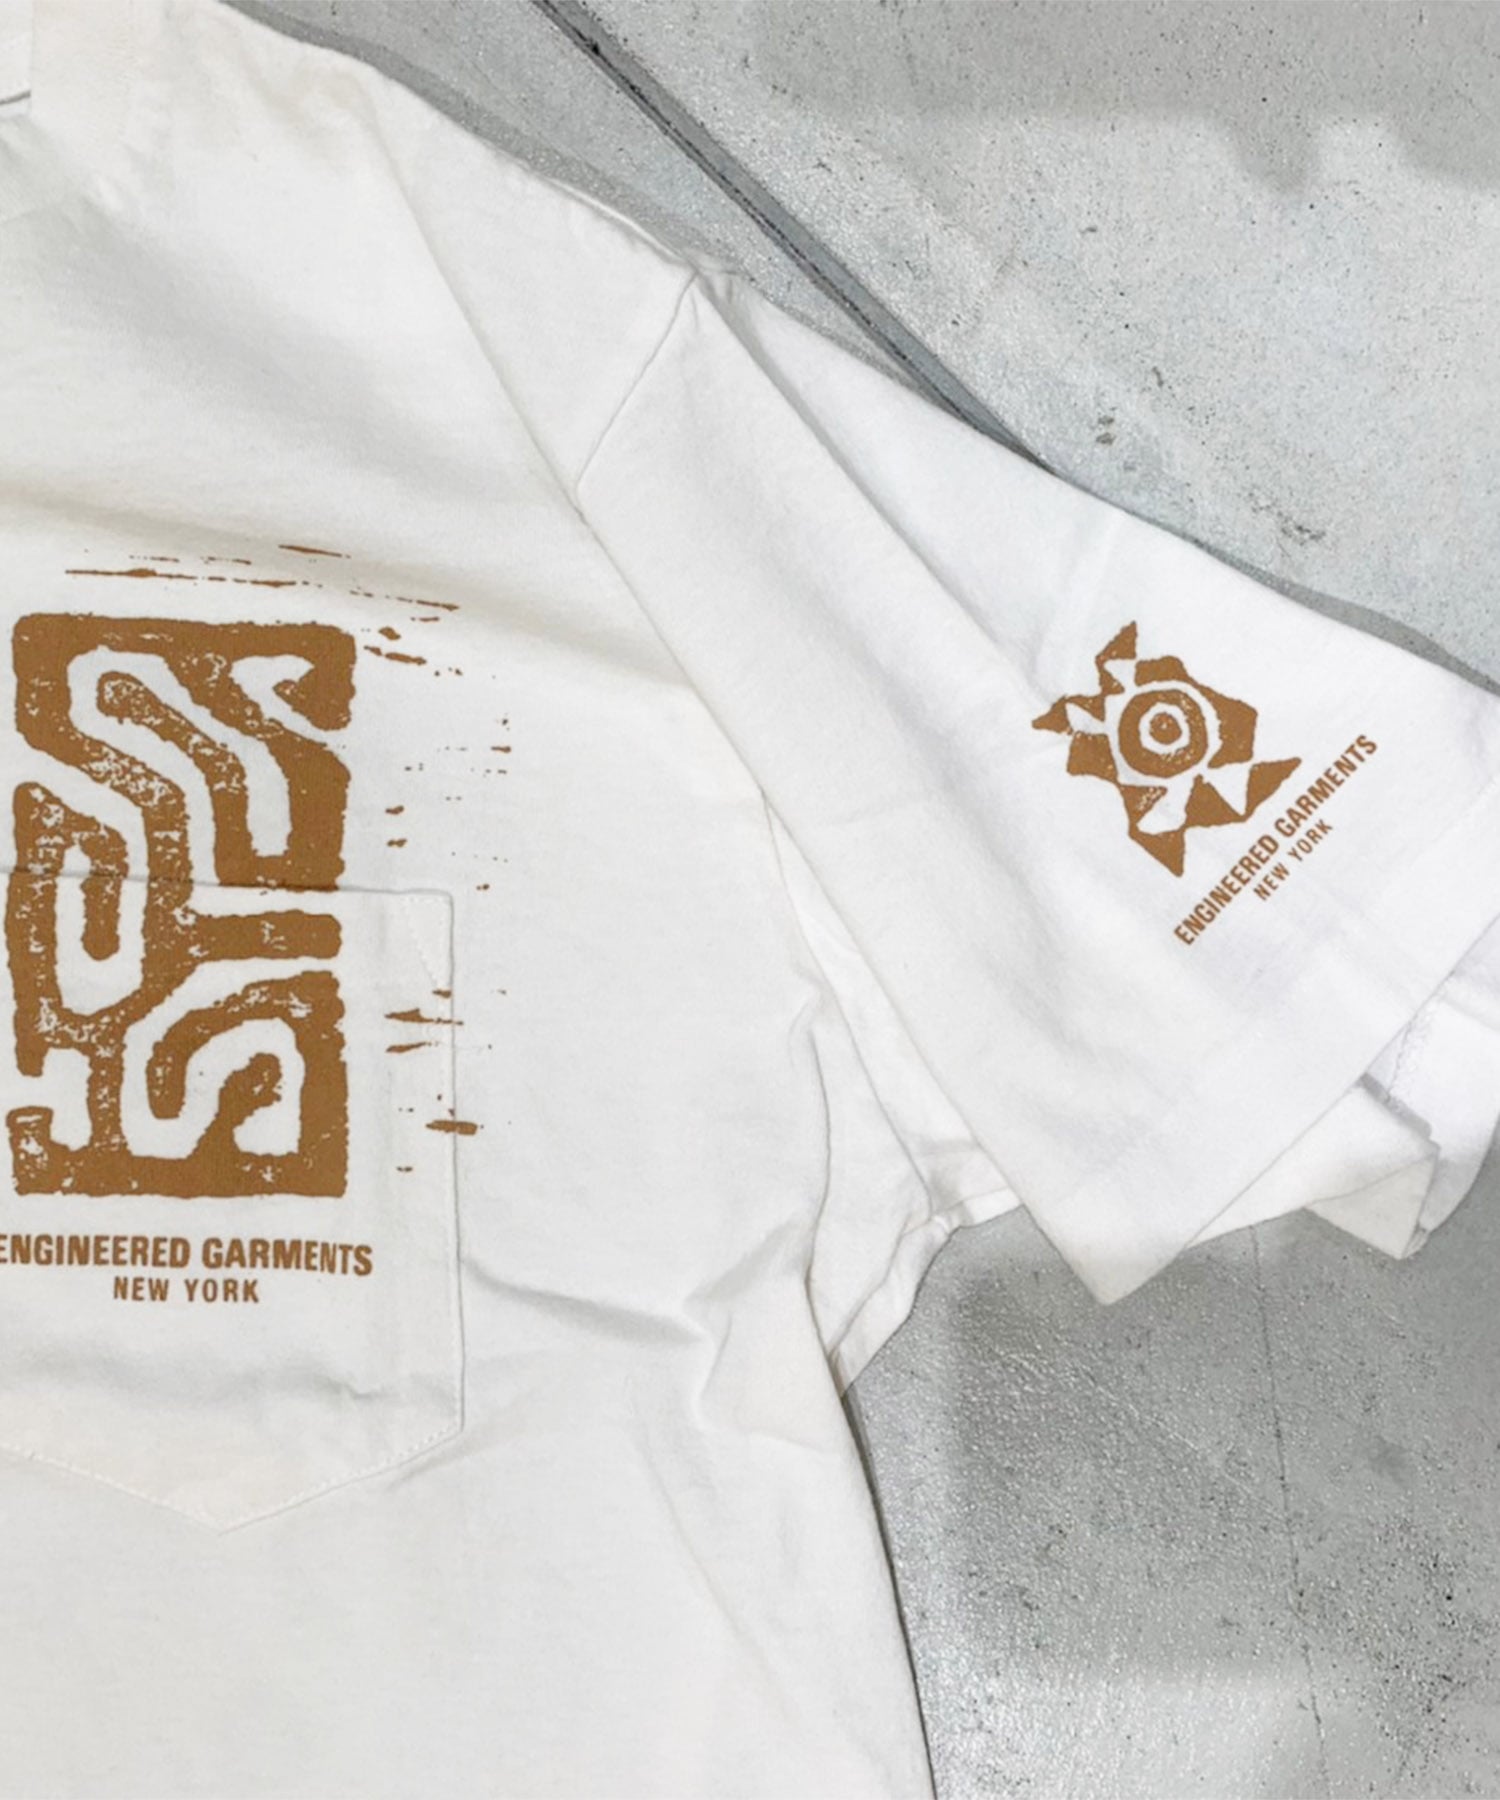 Printed T-shirt Rhino Engineered Garments